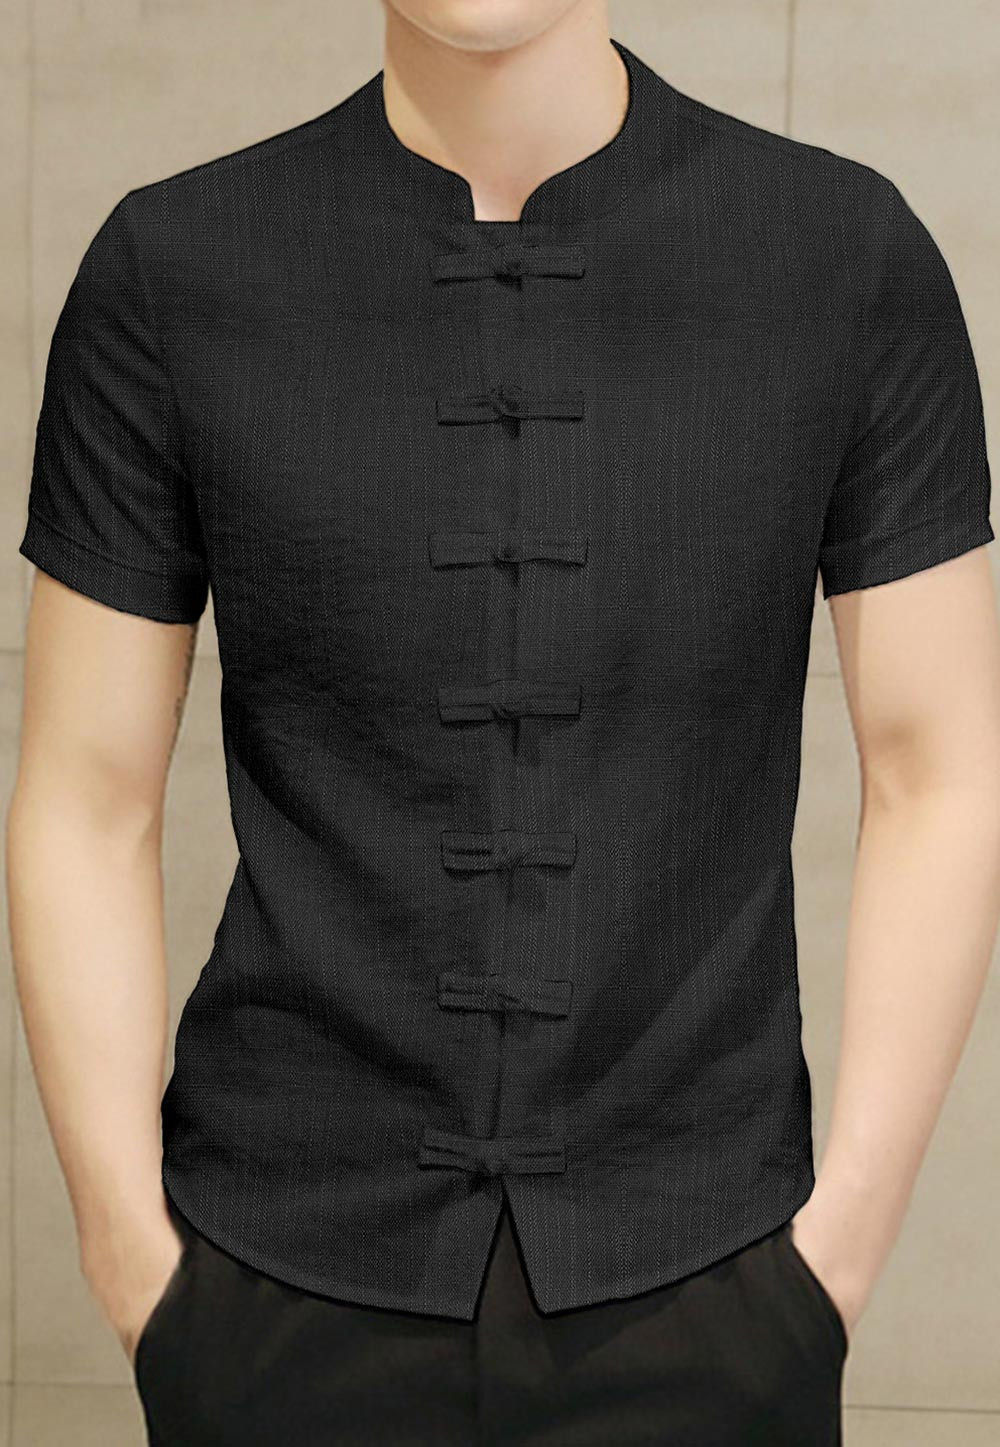 Buy Solid Color Cotton Slub Front Open Shirt in Black Online : MTE647 ...